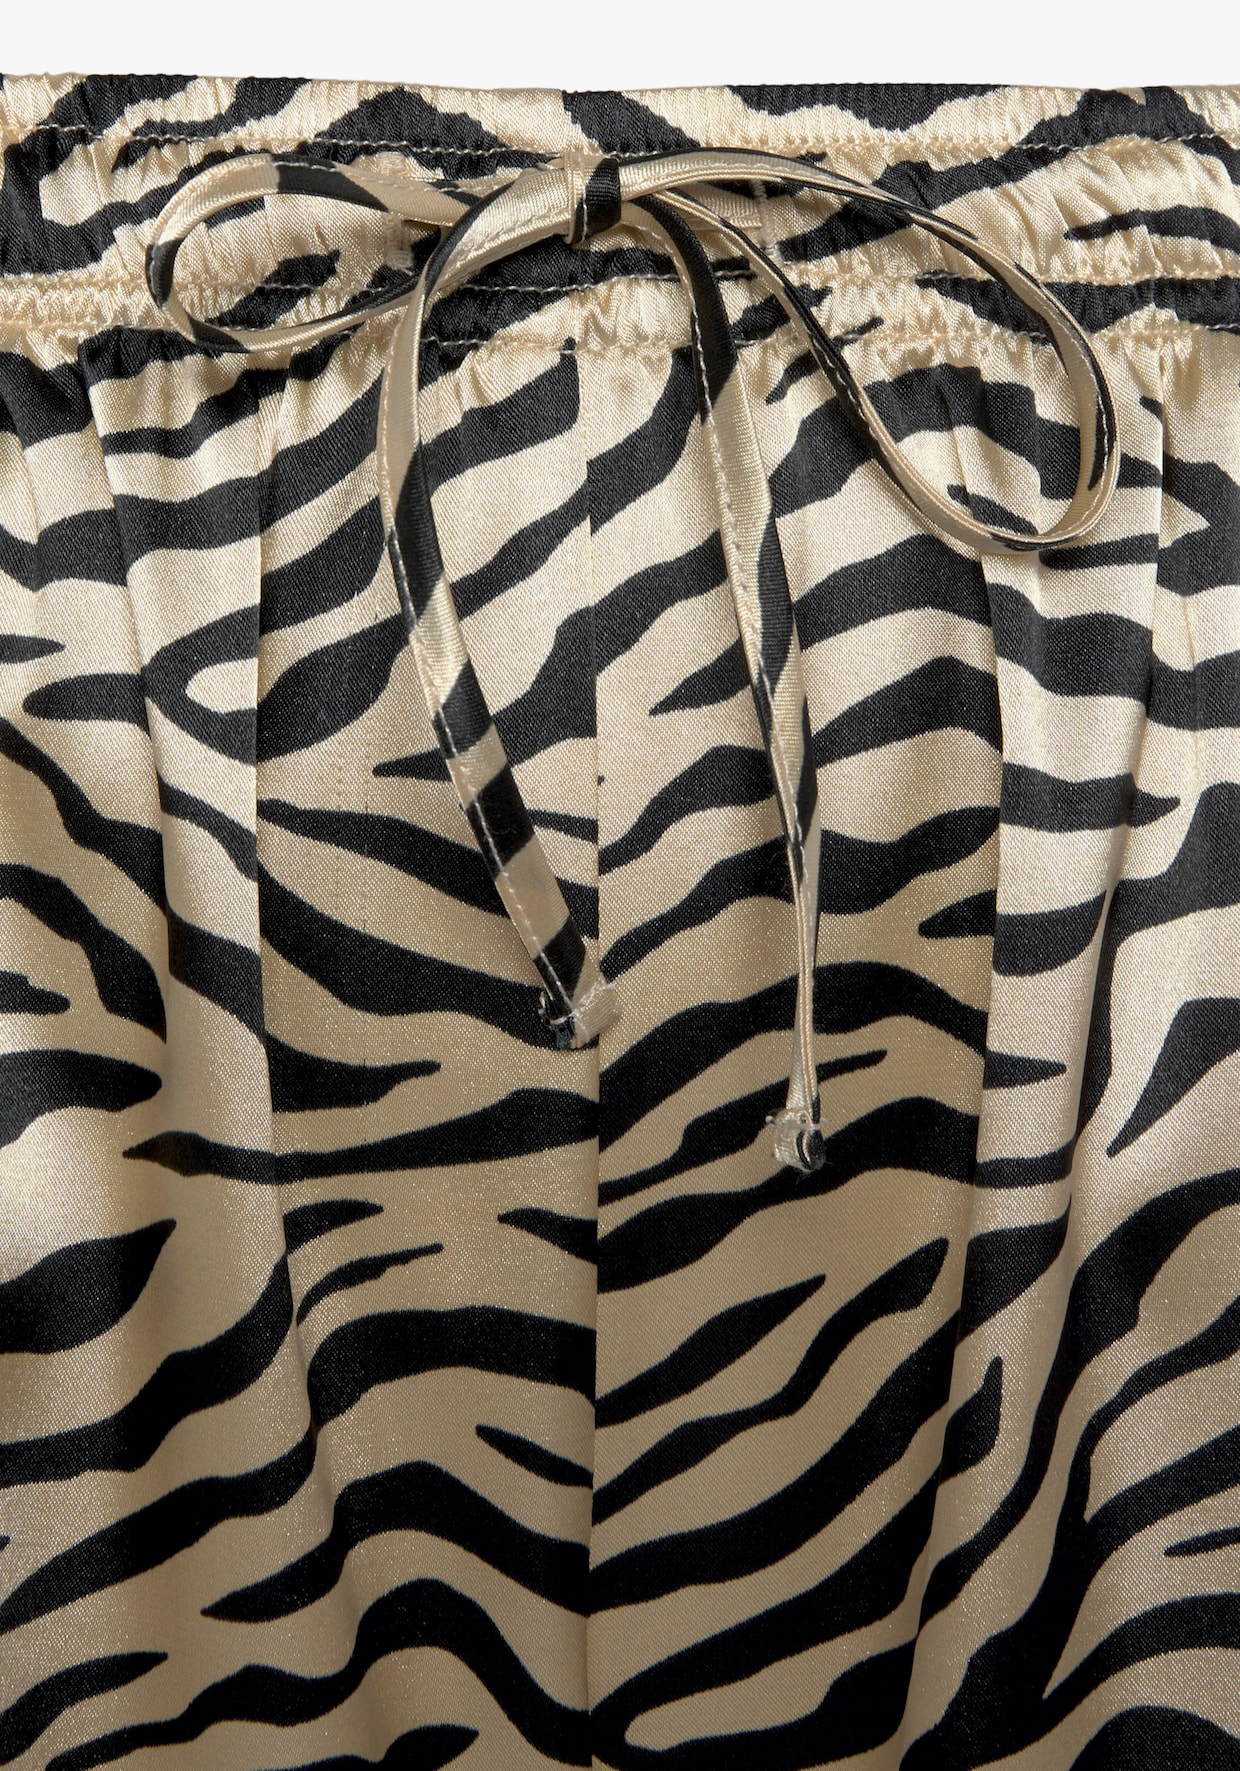 Buffalo Pyjamabroek - zebraprint